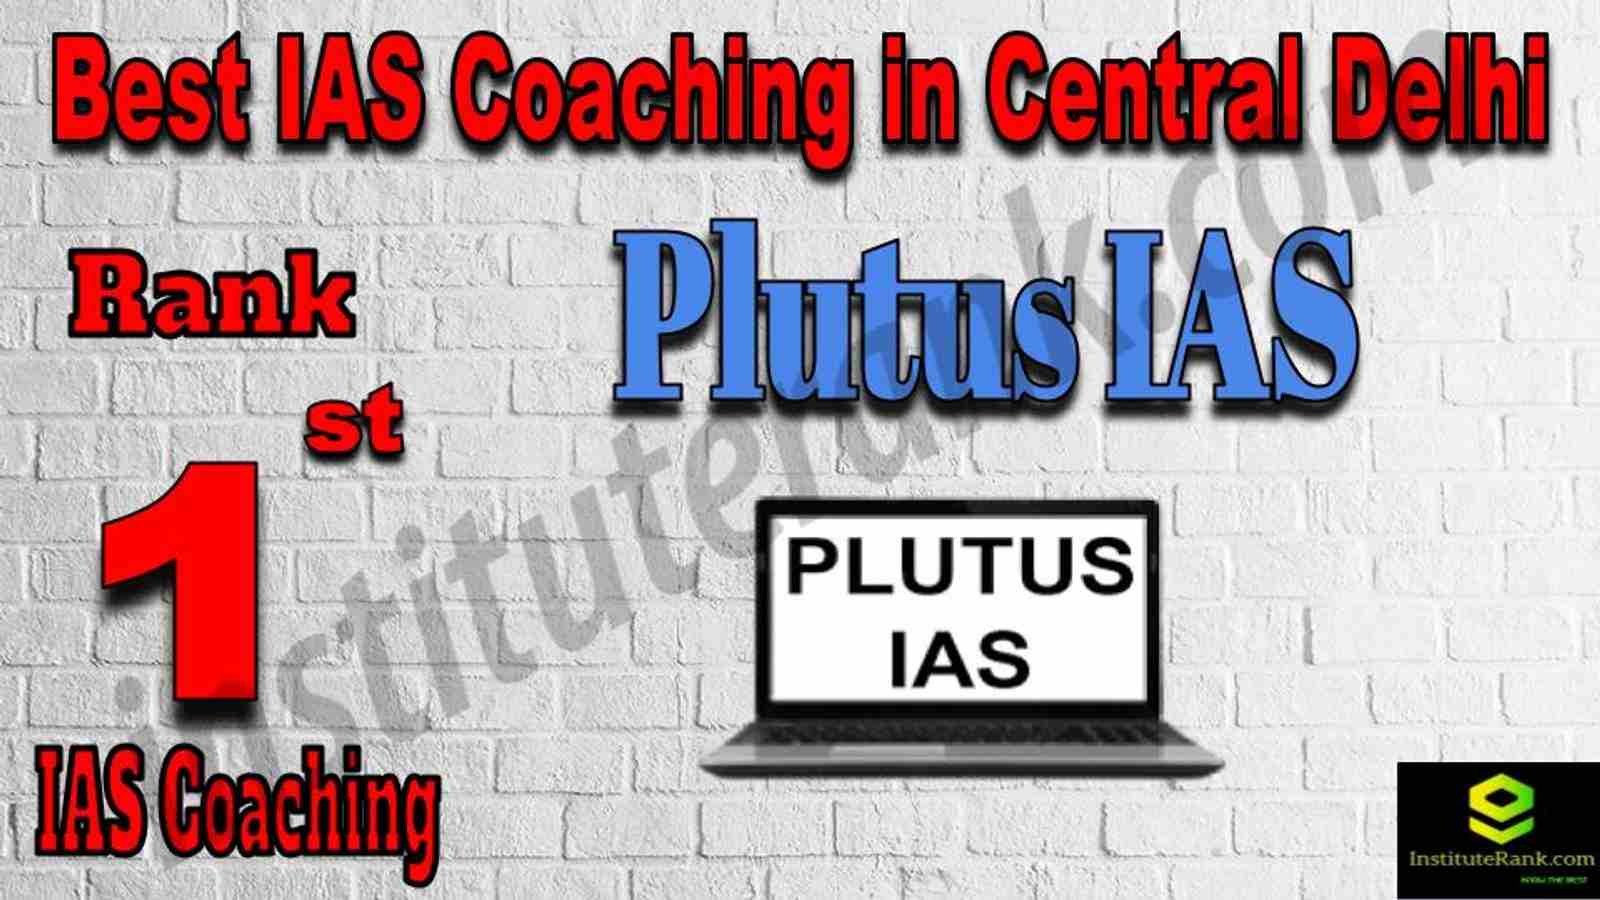 1st Best IAS Coaching in Central Delhi